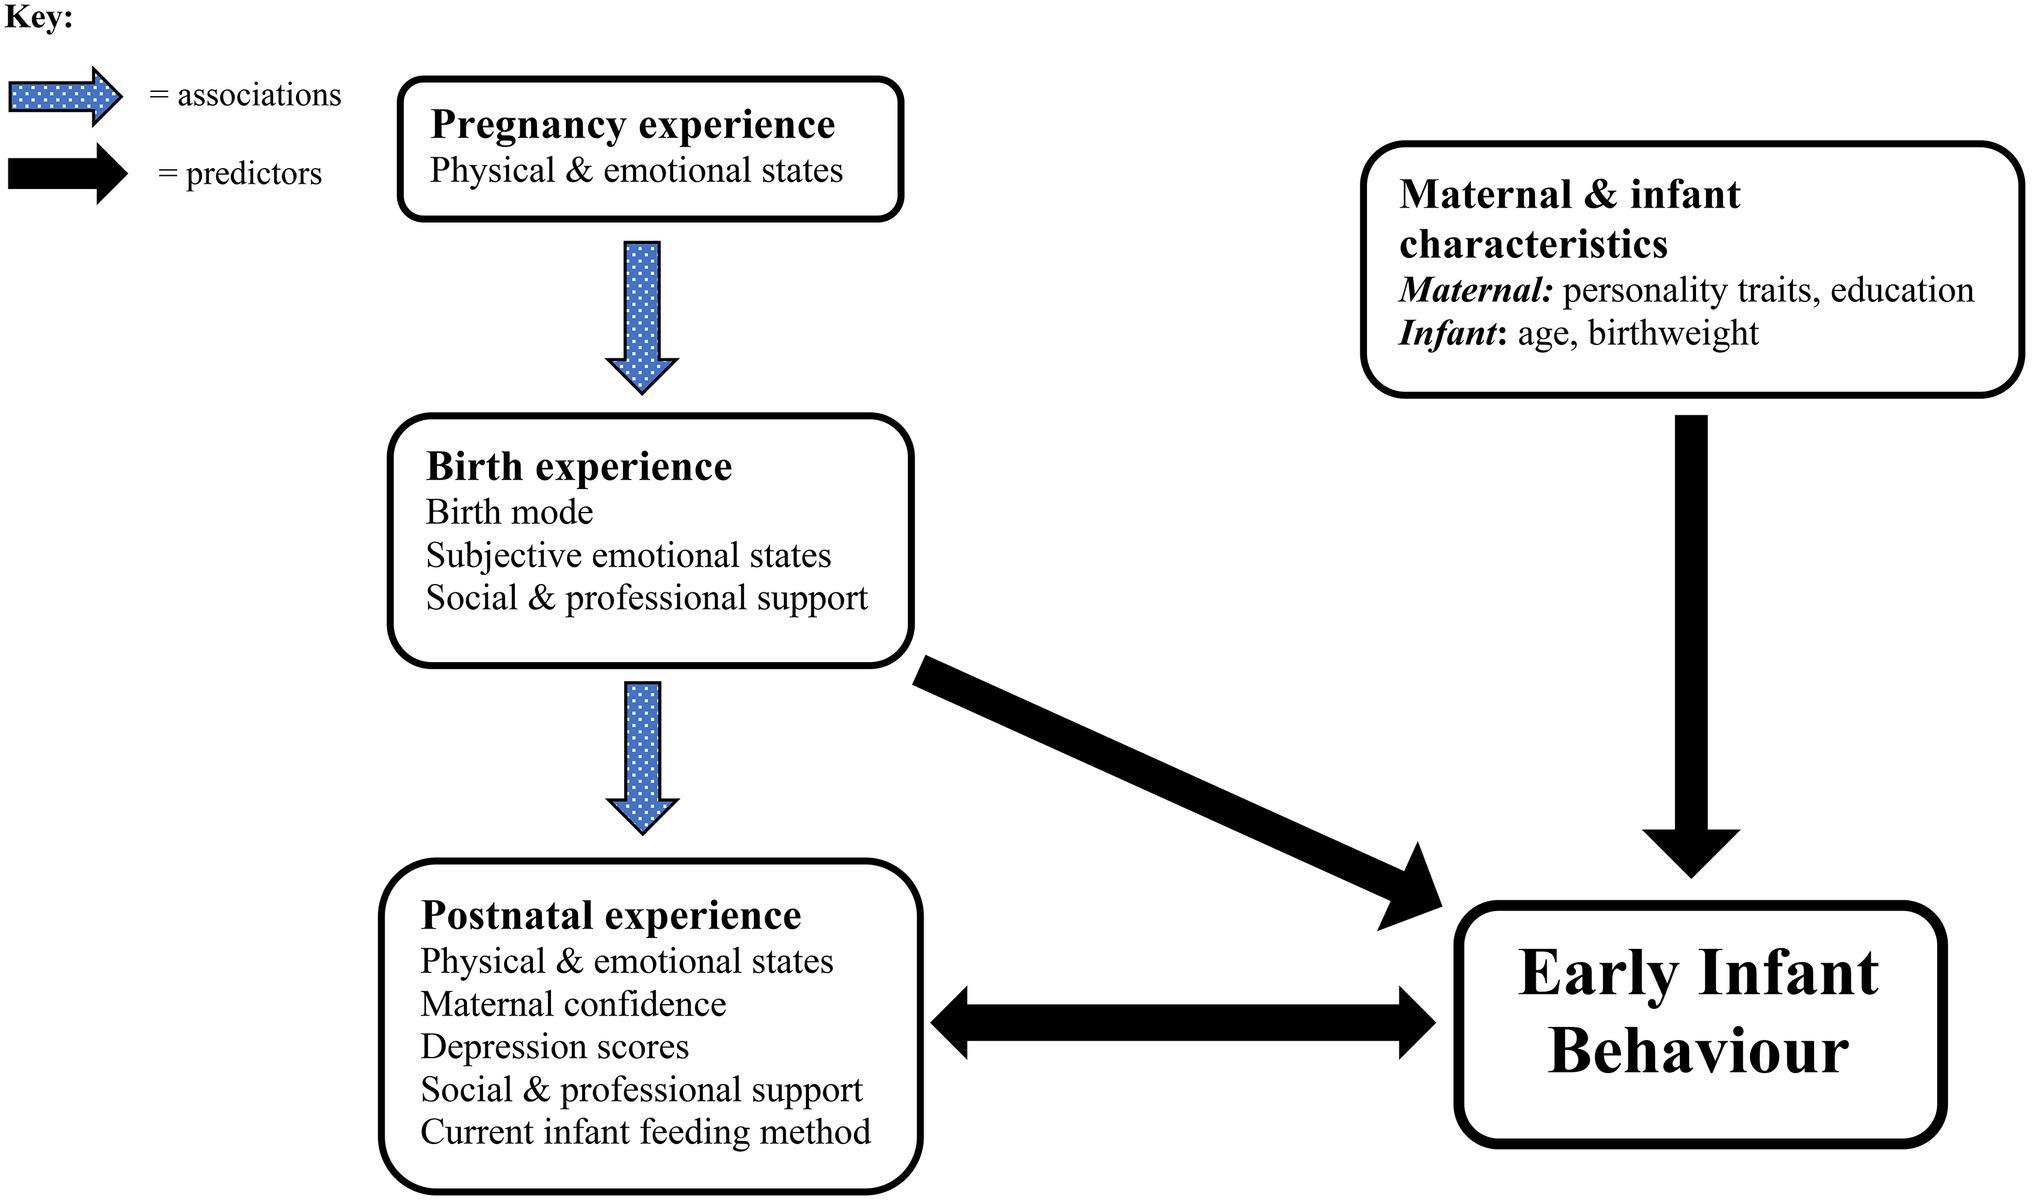 APA - Treatment of Psychological Distress in Parents of Premature Infants